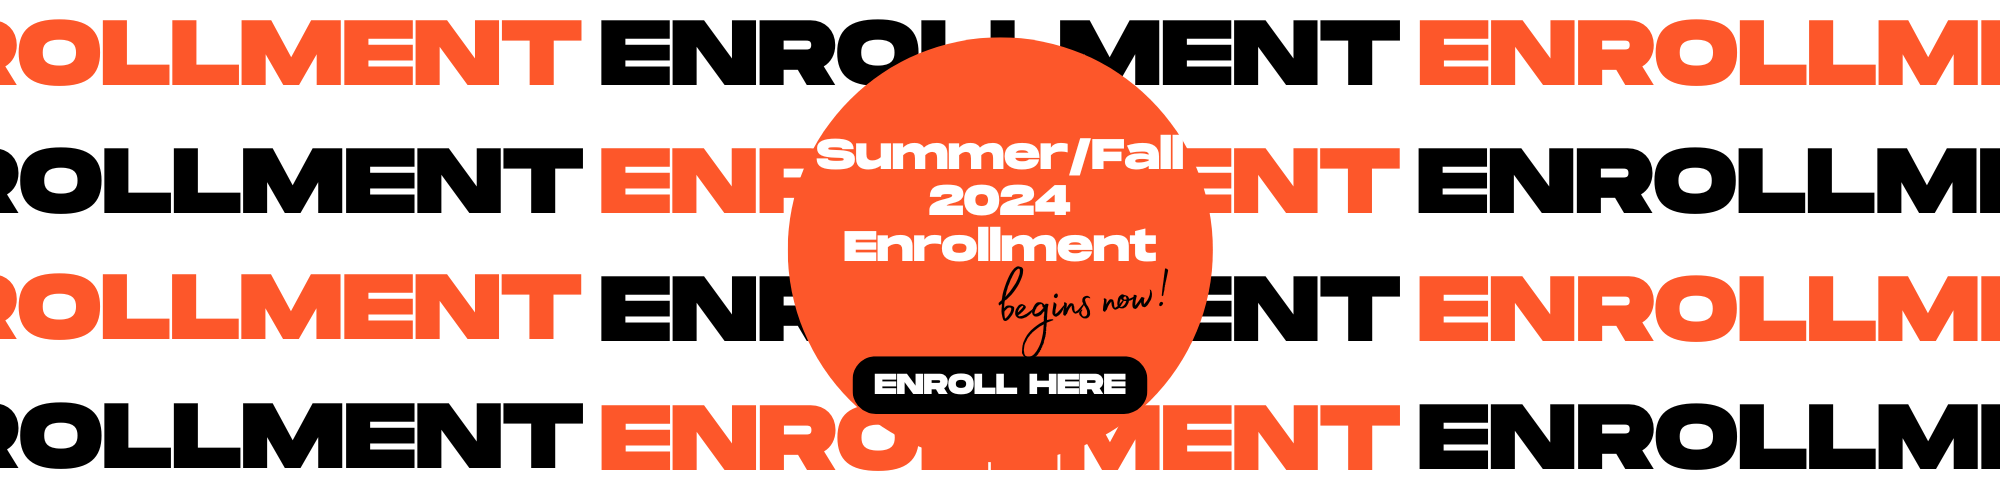 2024 Summer/Fall Enrollment